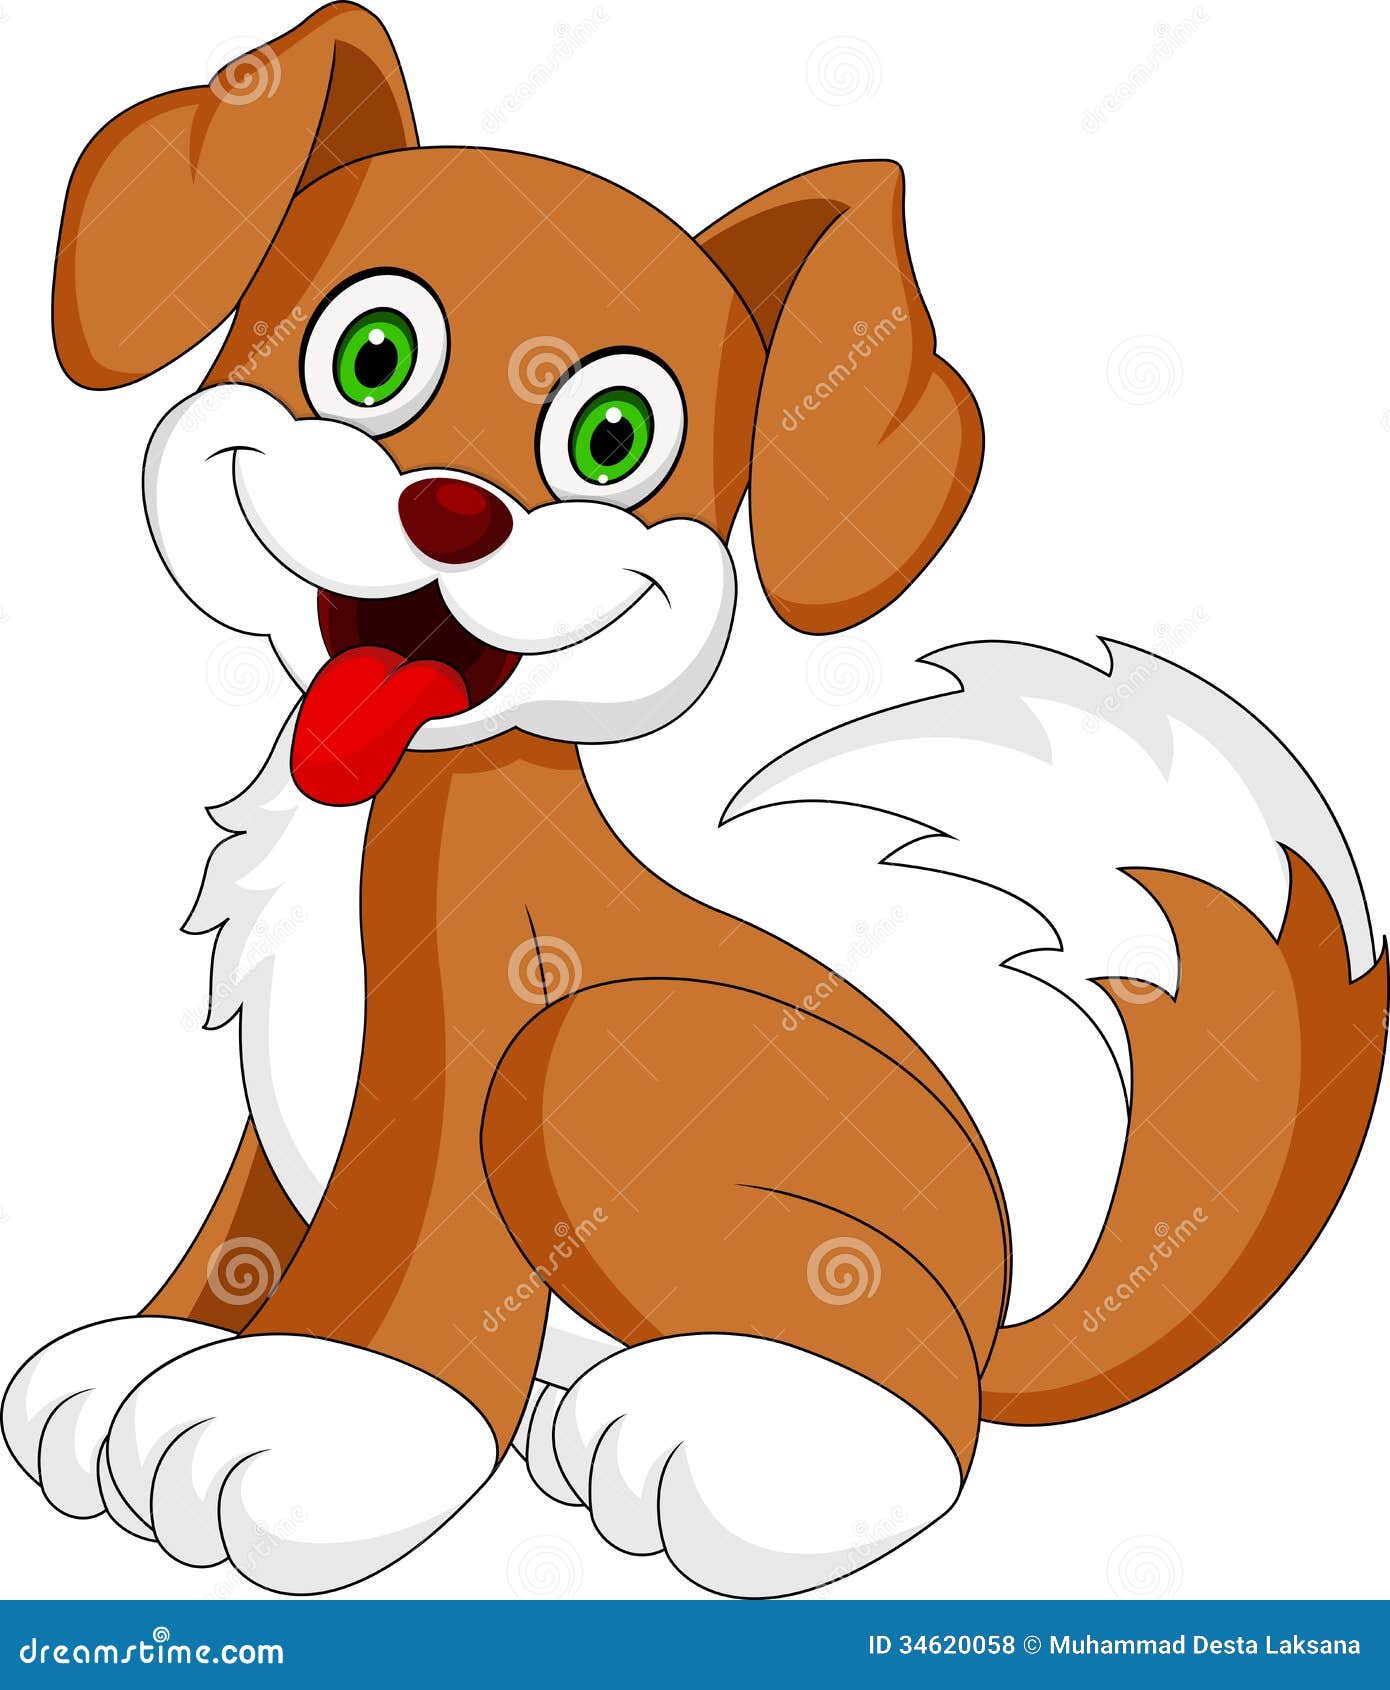 Puppy dog cartoon stock illustration. Illustration of pedigree - 34620058